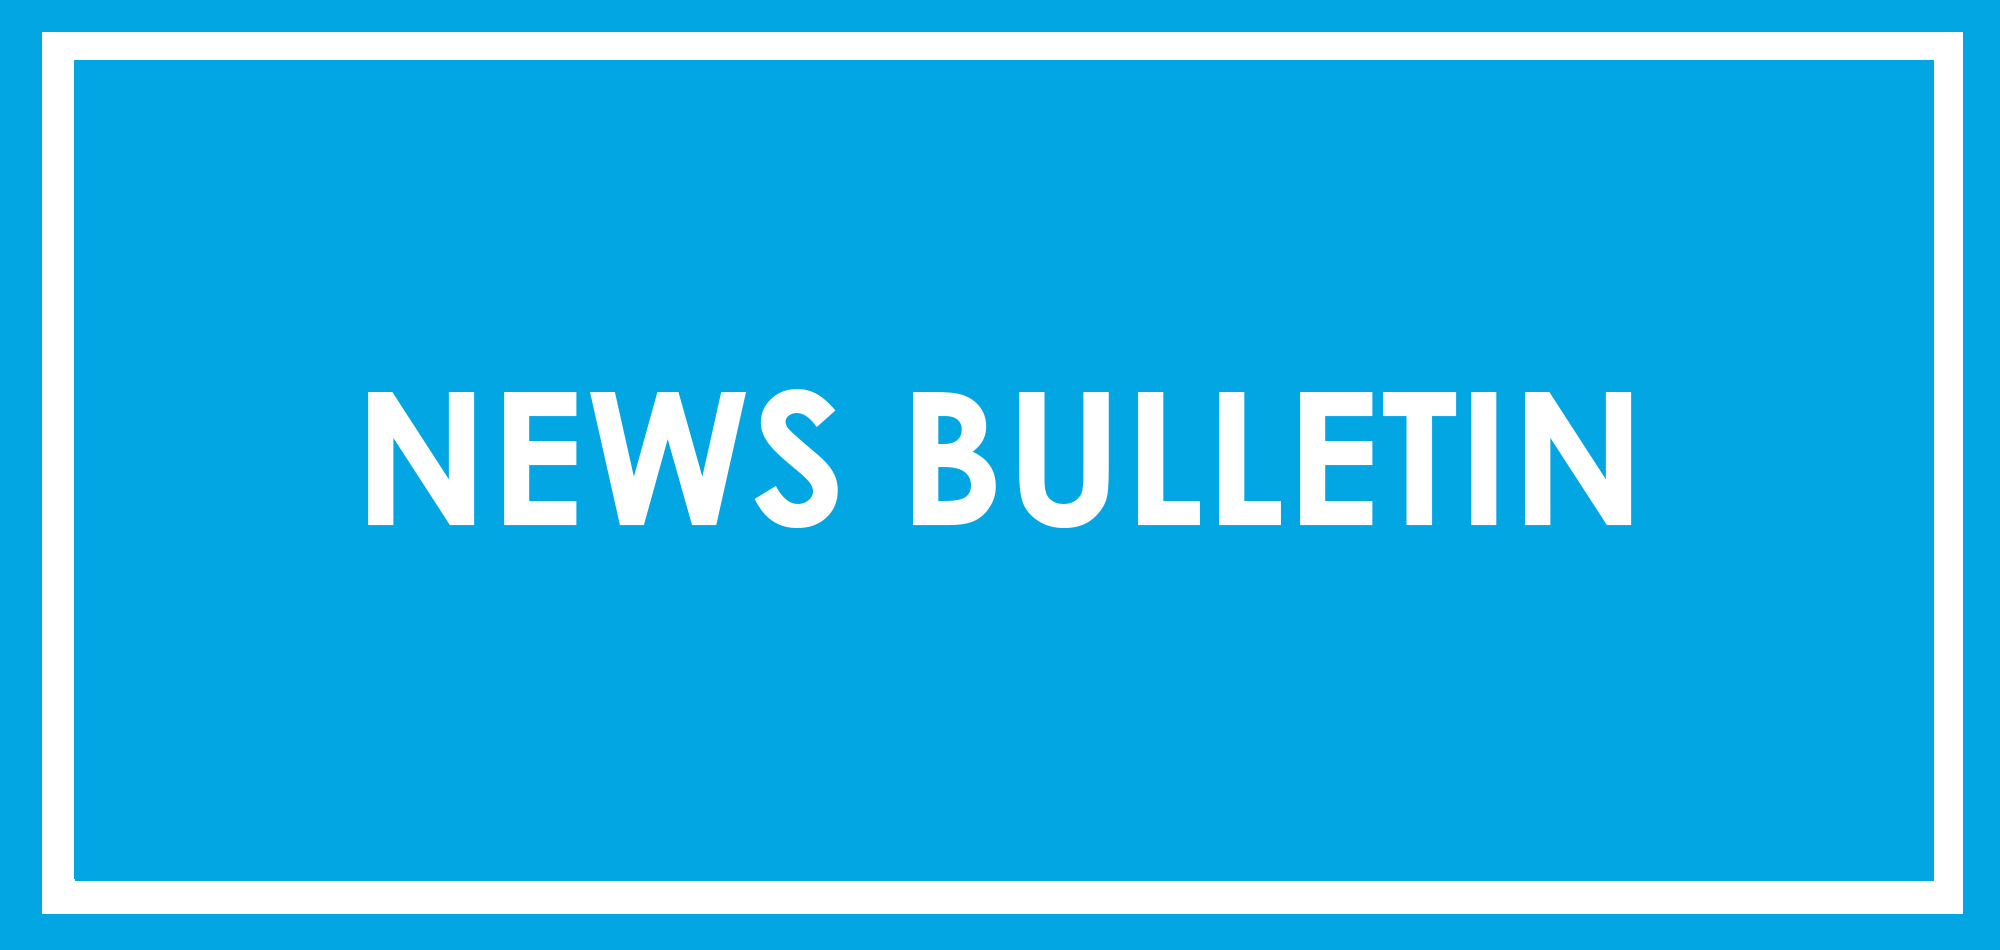 News Bulletin - 10.11.21